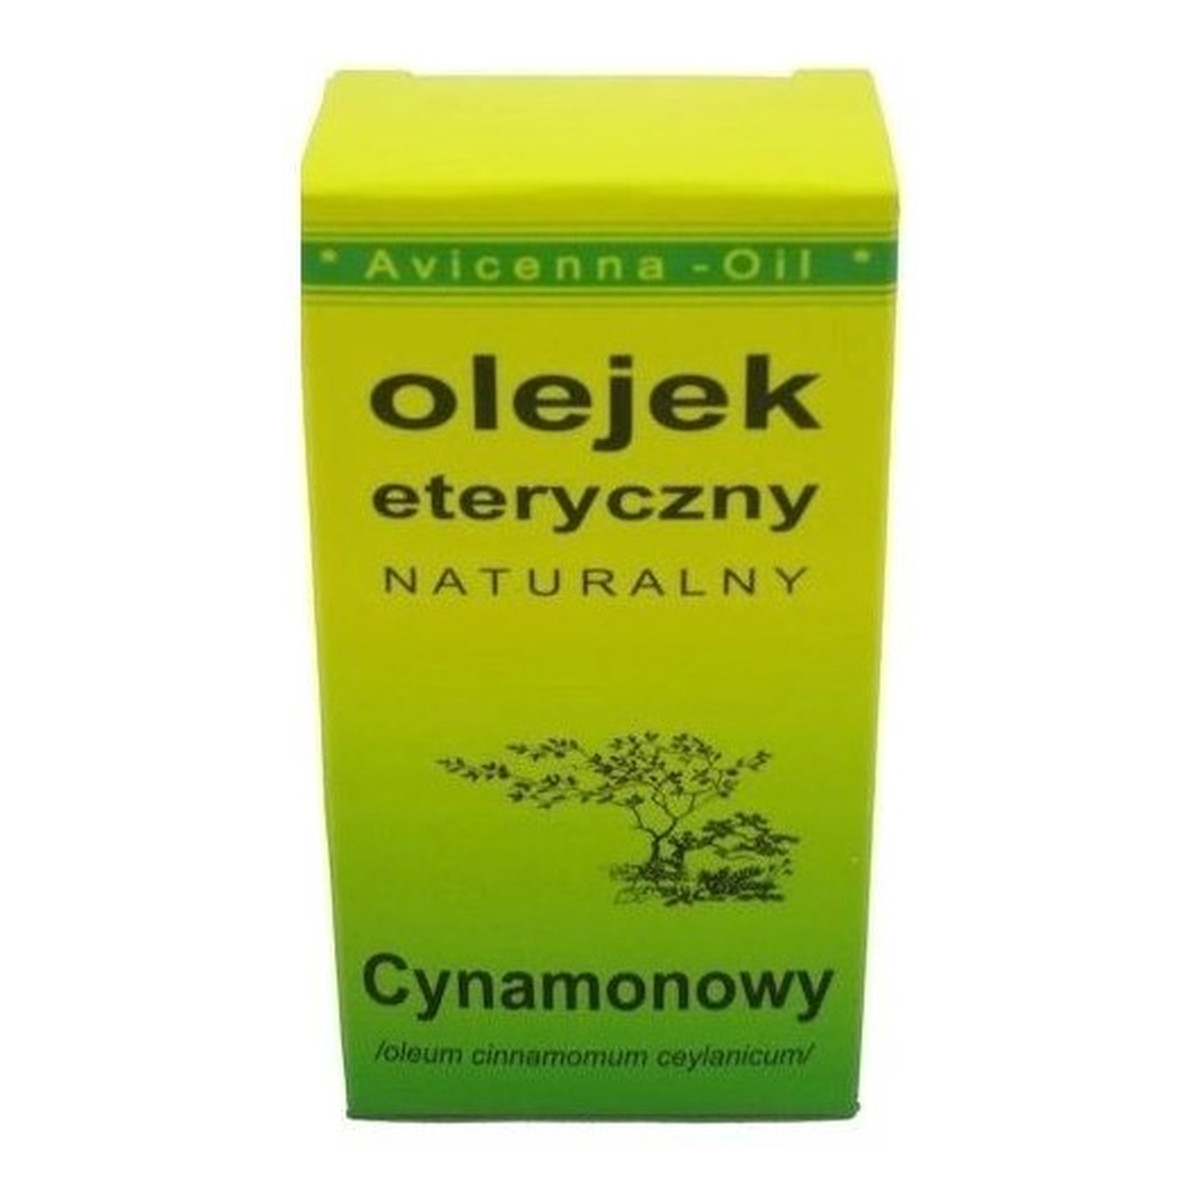 Avicenna-Oil Naturalny Olejek Eteryczny Cynamonowy 7ml